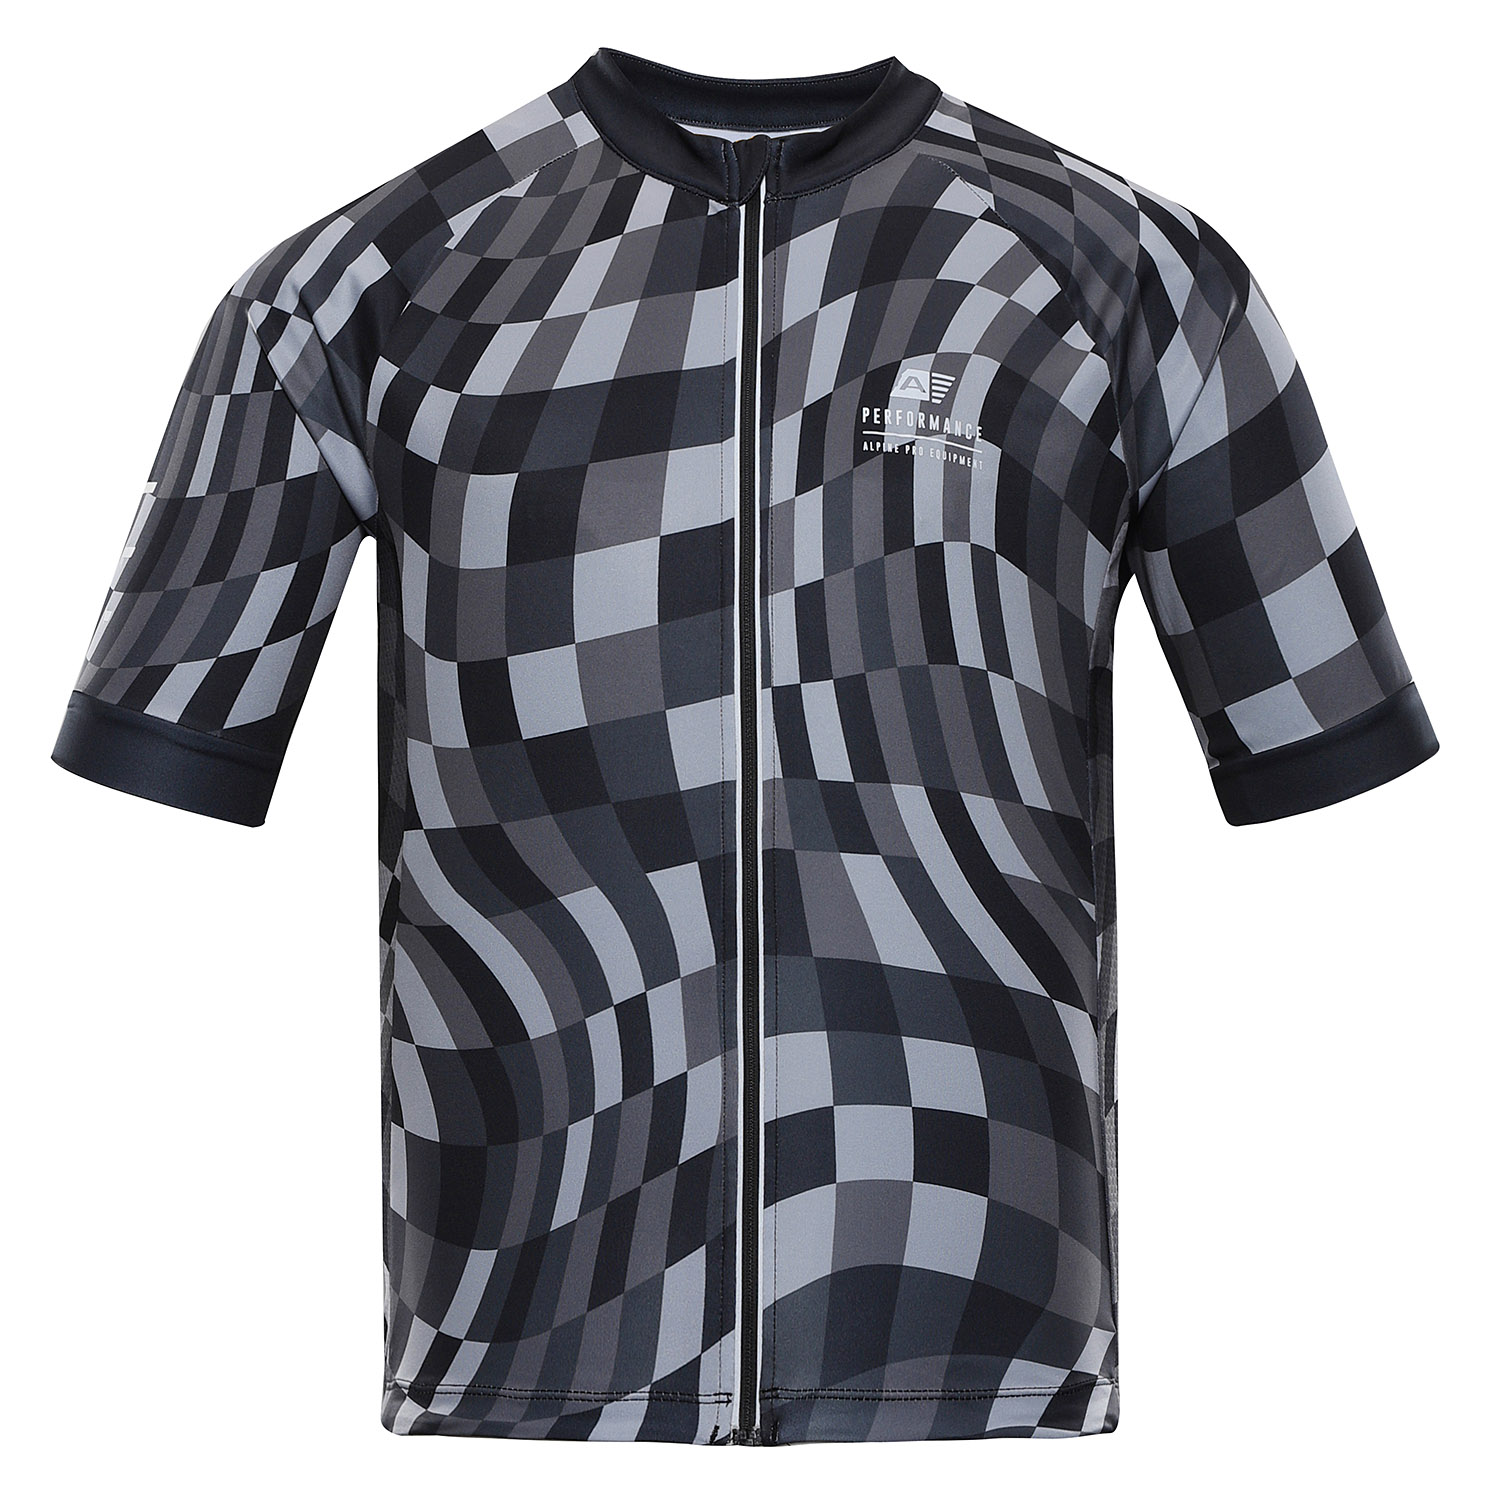 Men's cycling jersey ALPINE PRO SAGEN dk. True Gray variant of PB